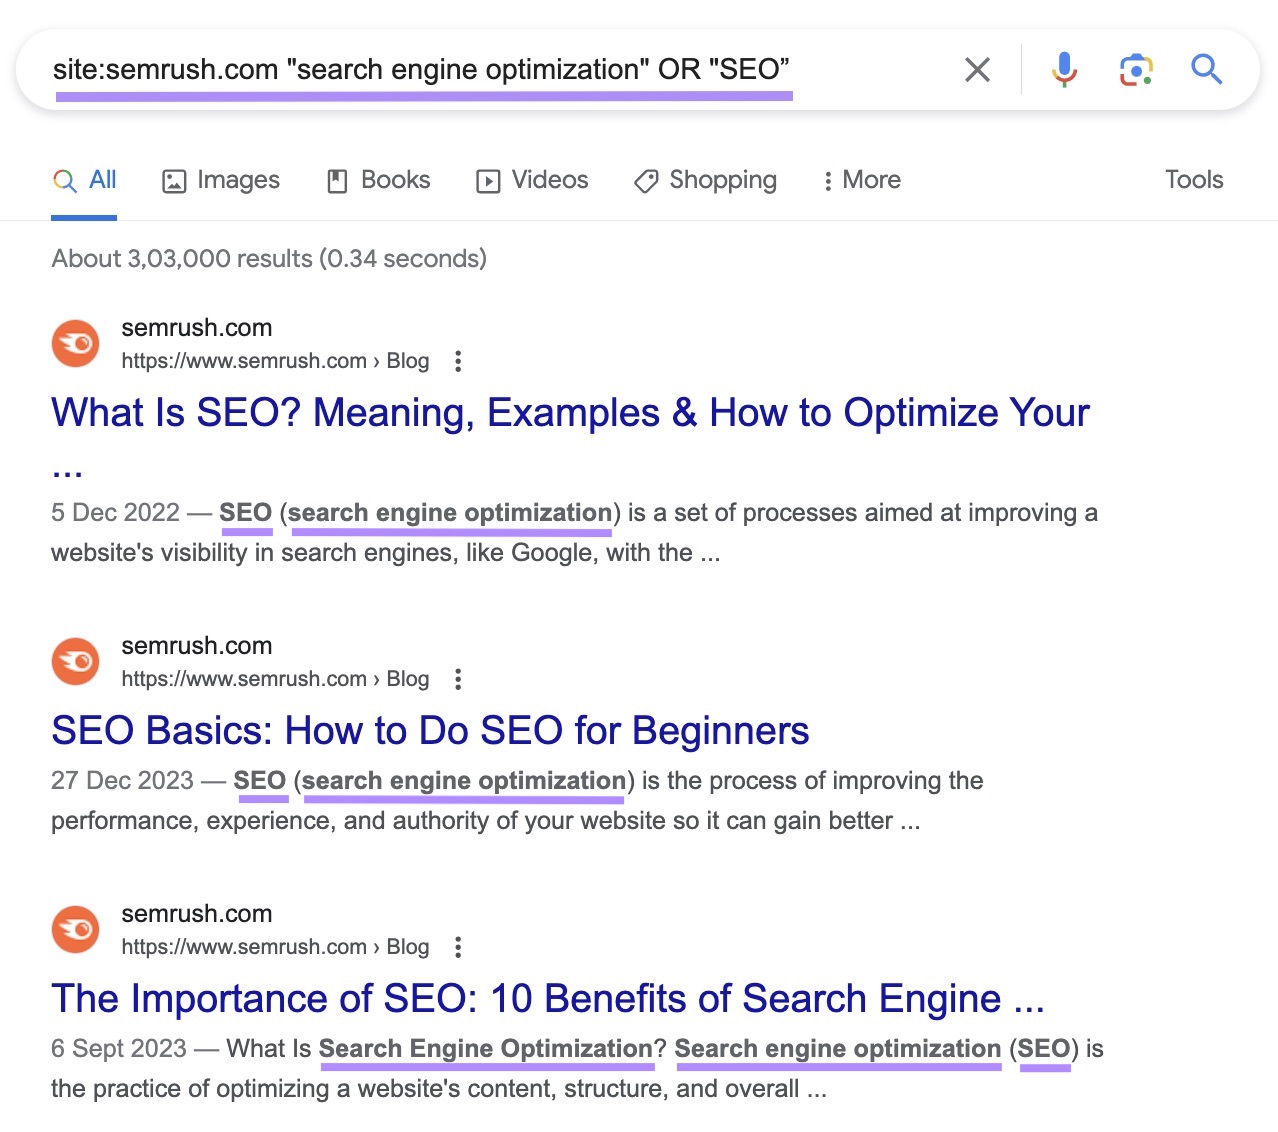 semrush.com "search motor  optimization" OR "SEO”” tract  search